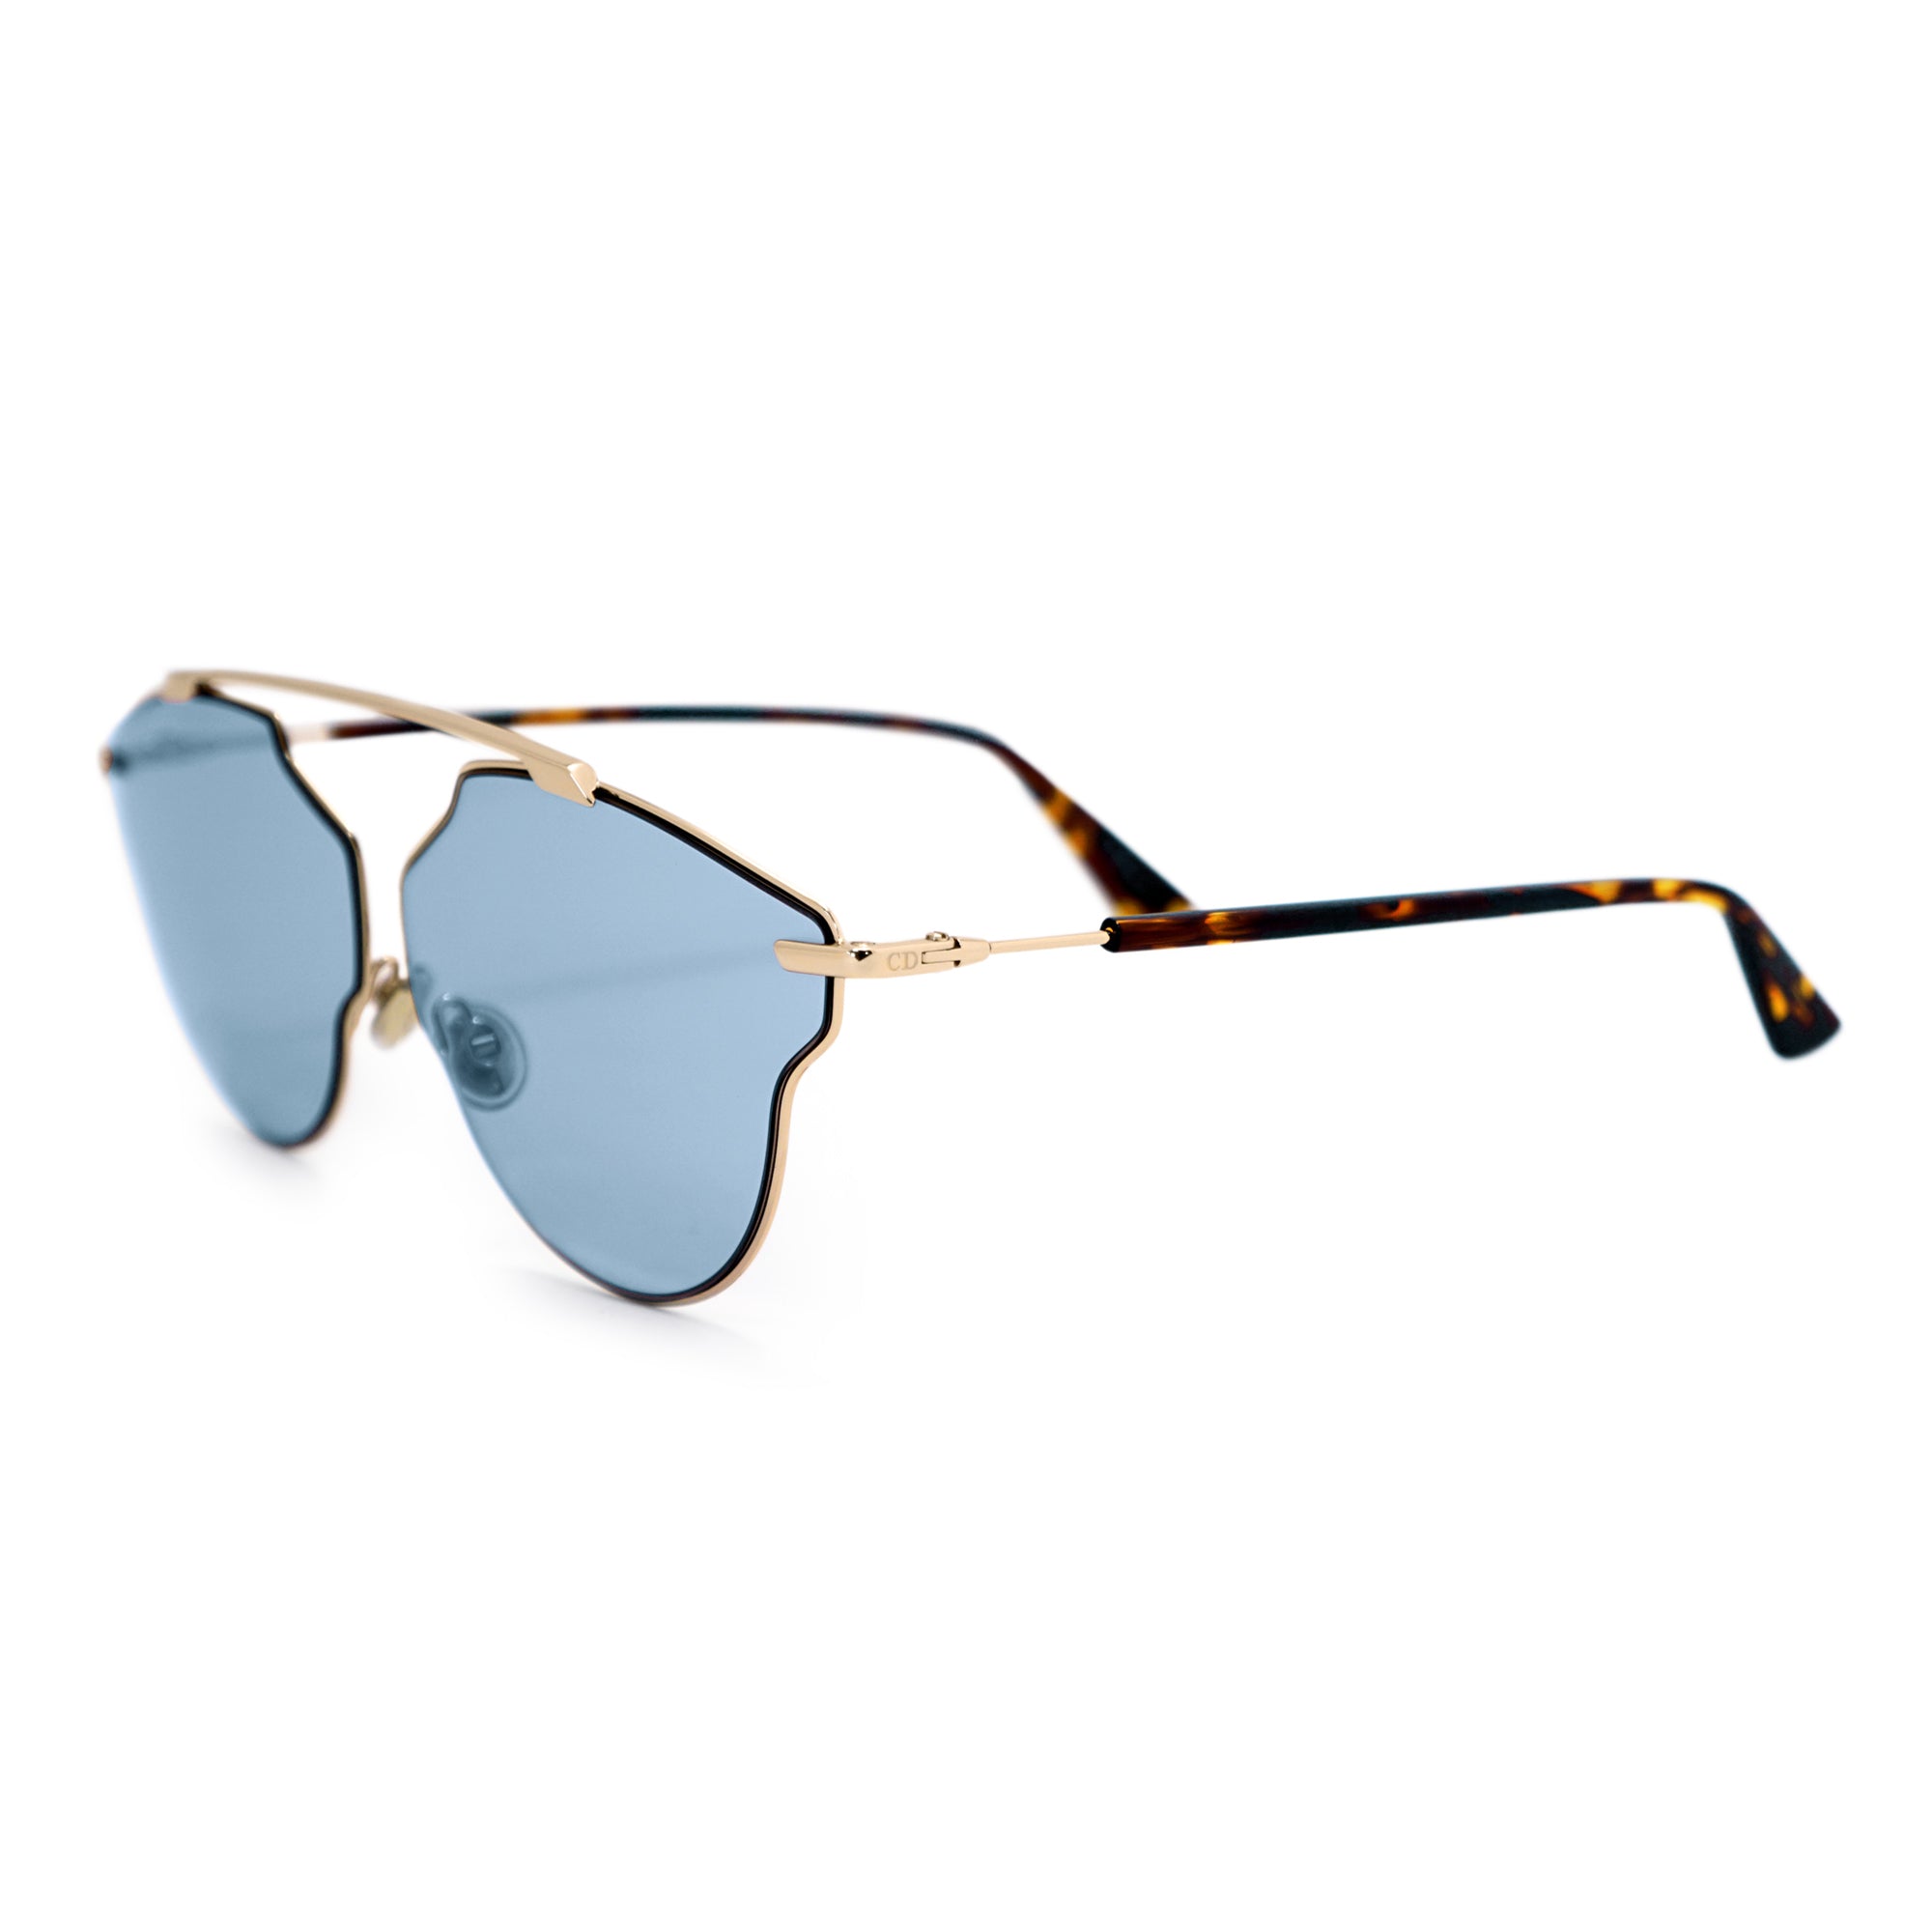 Christian Dior Aviator Sunglasses Sorealpop DDBKU 59